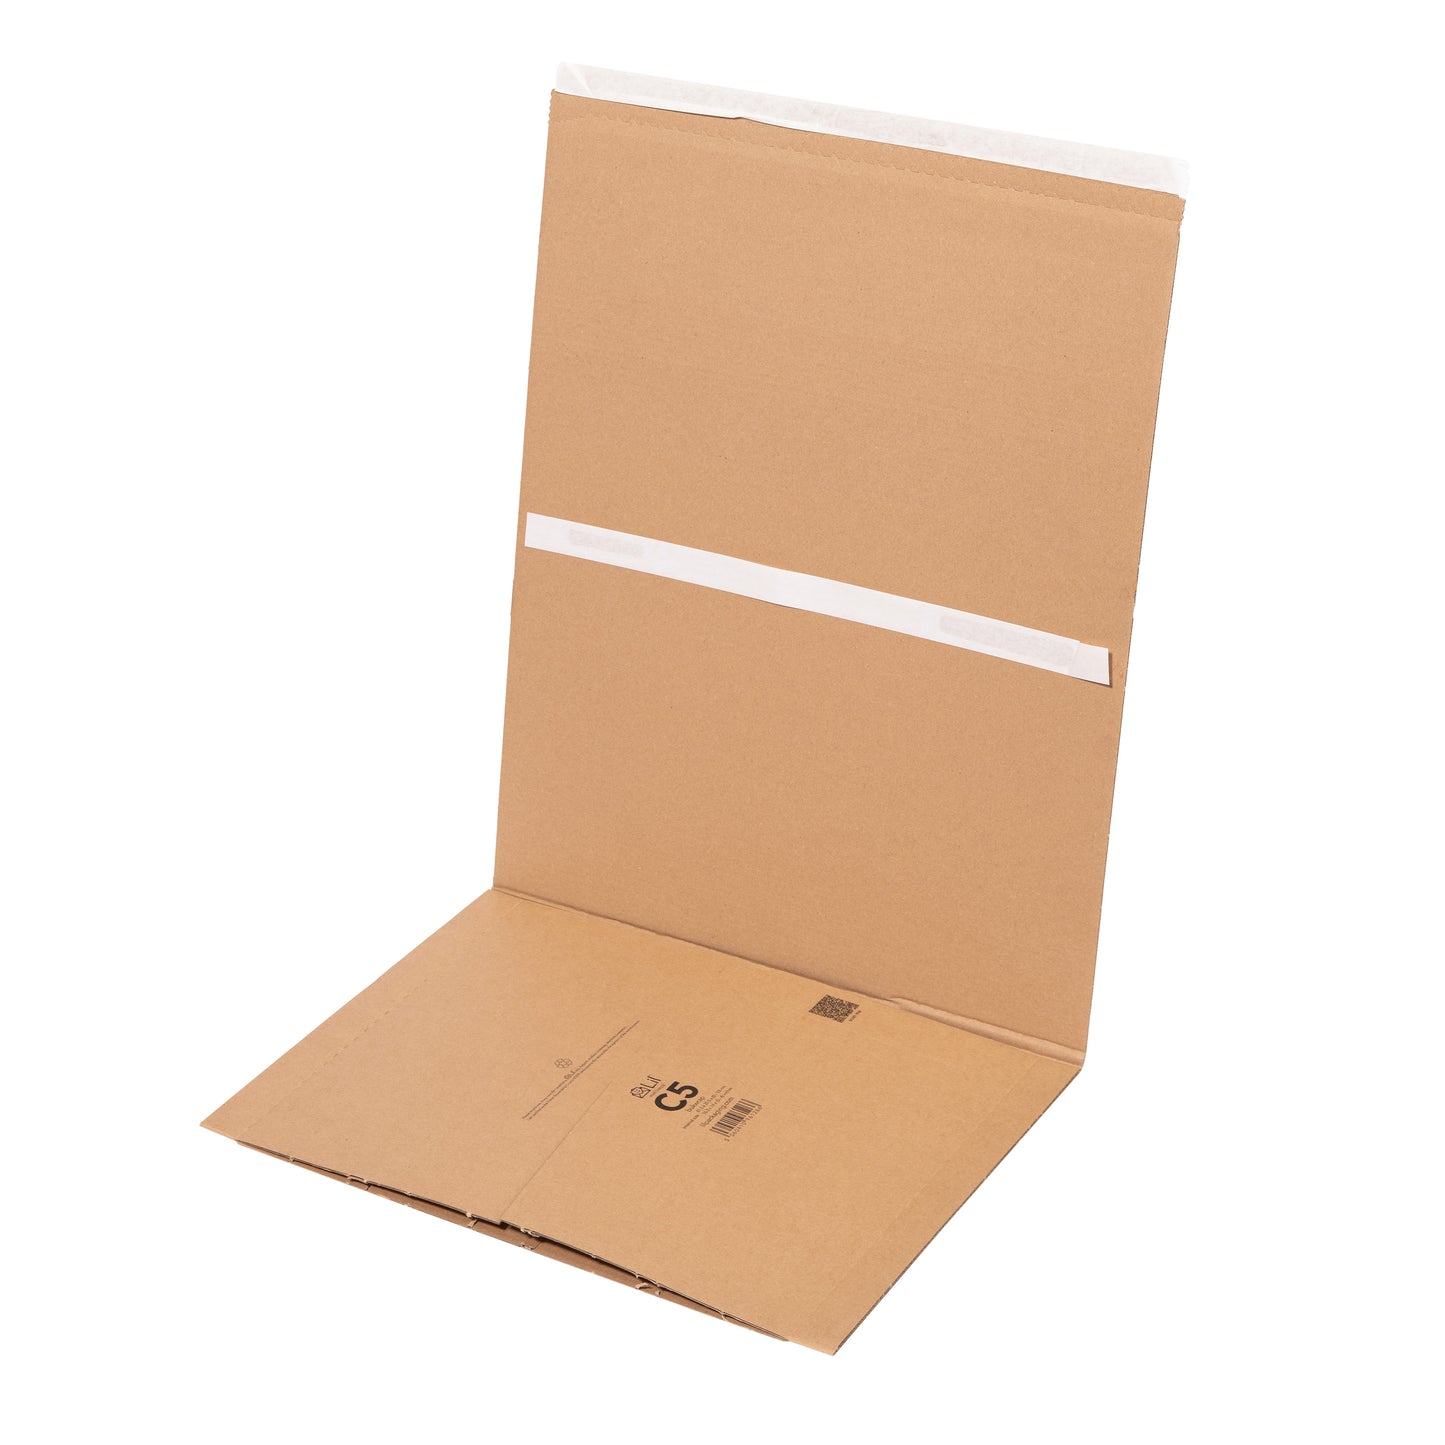 C5 Book Wraps Book Packaging | Lil Packaging